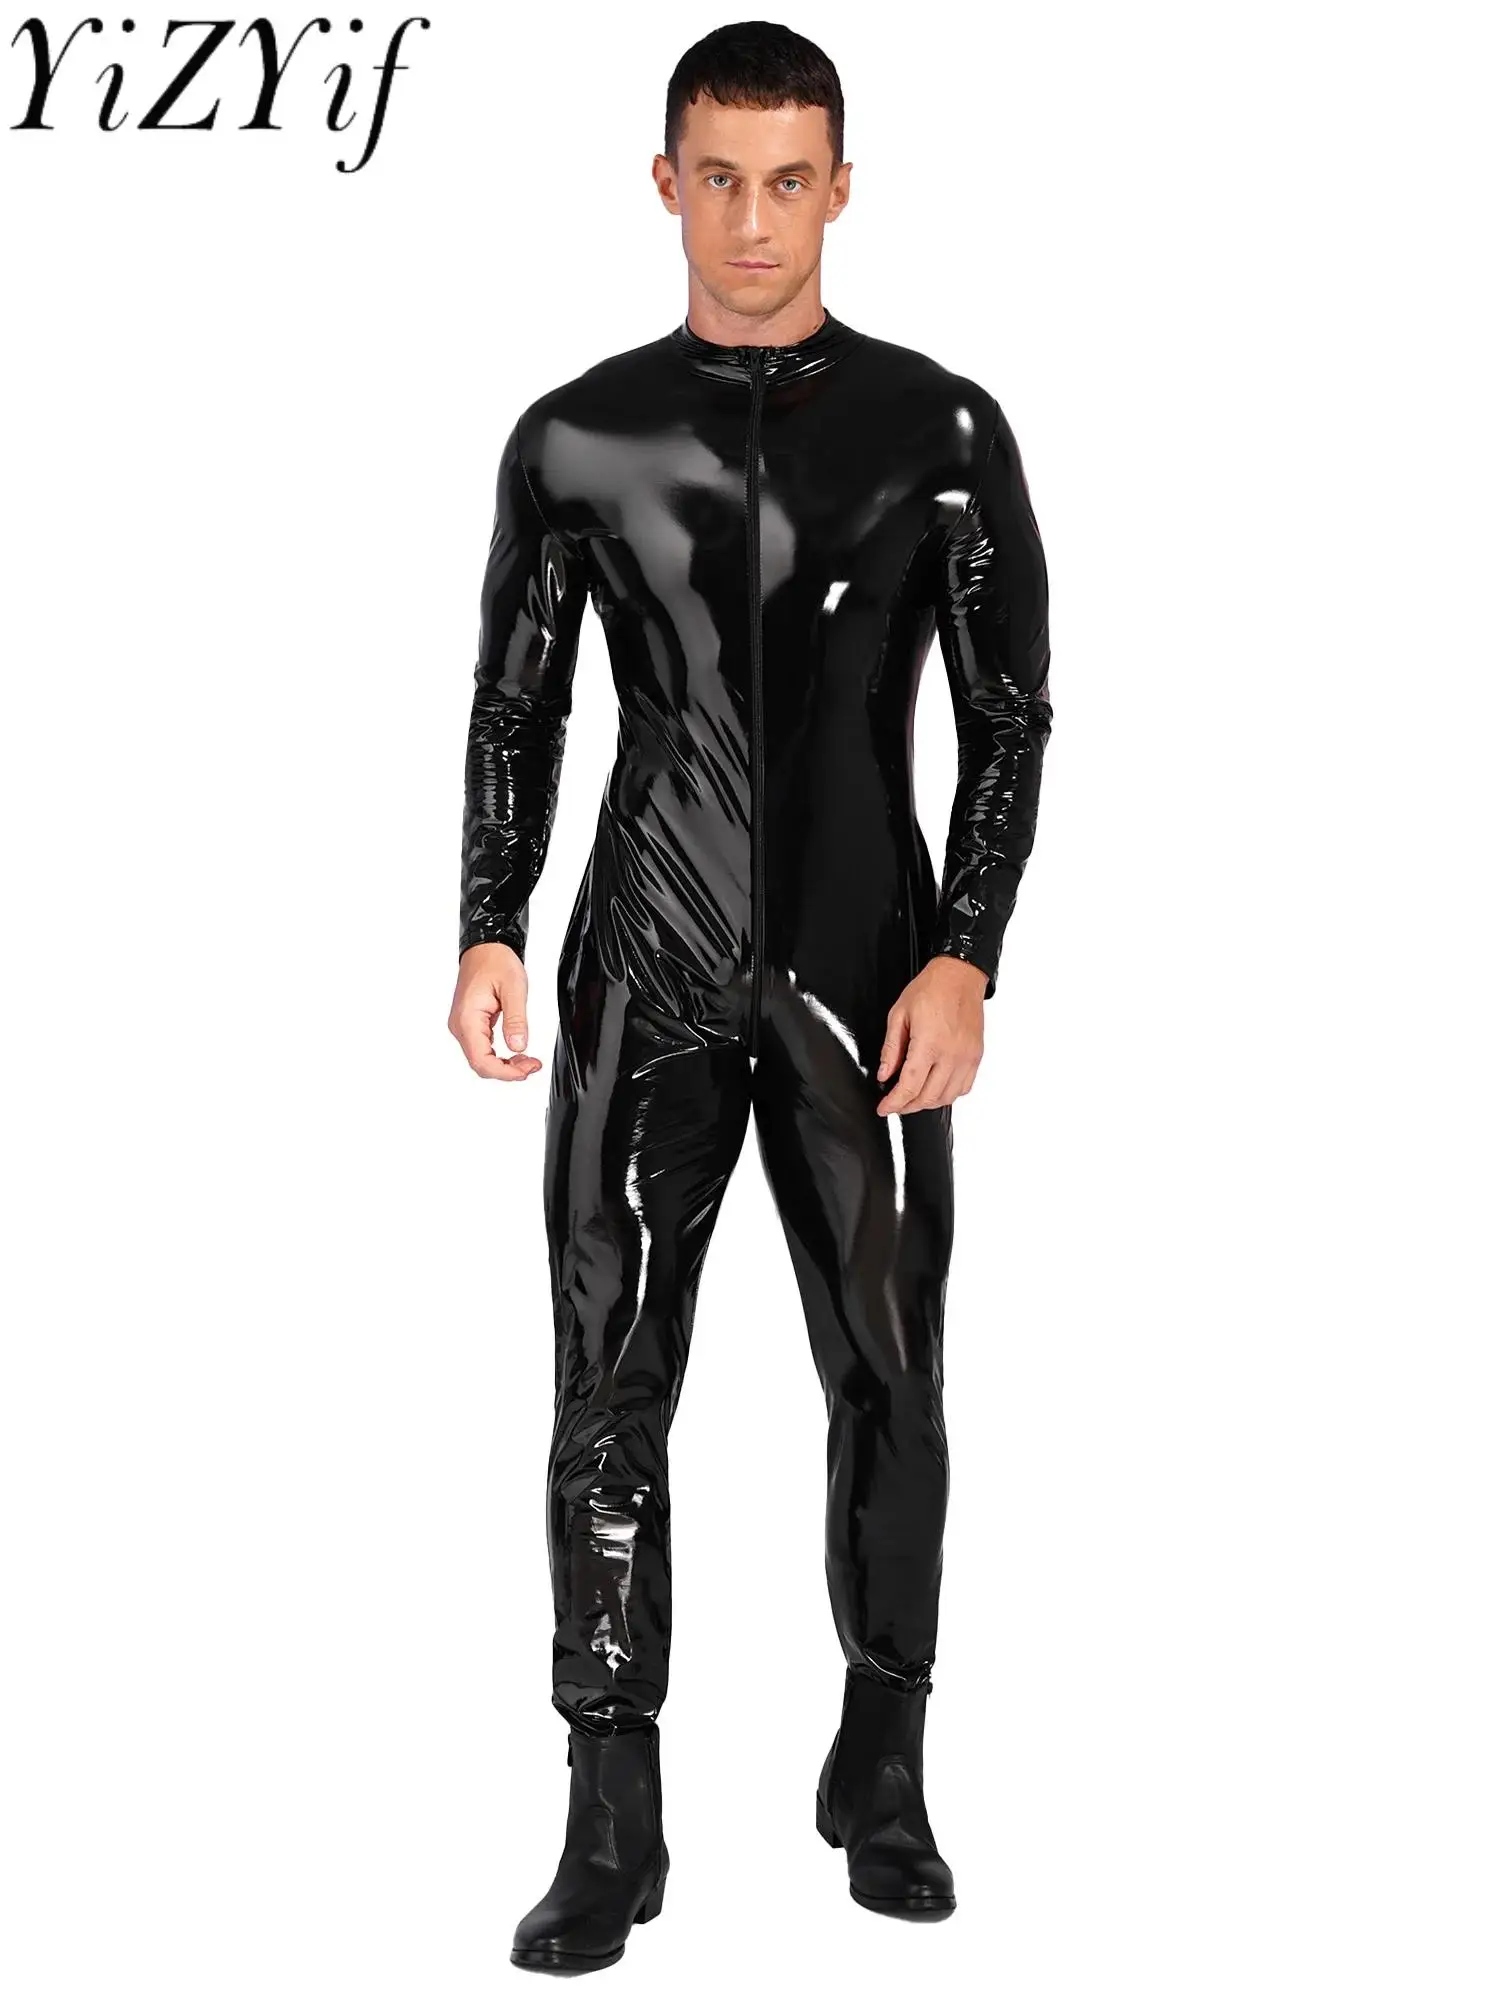 

Mens Wet Look Patent Leather Bodysuit Rave Party Nightclub Pole Dancing Show Costume Long Sleeve Zipper Crotch Jumpsuit Clubwear